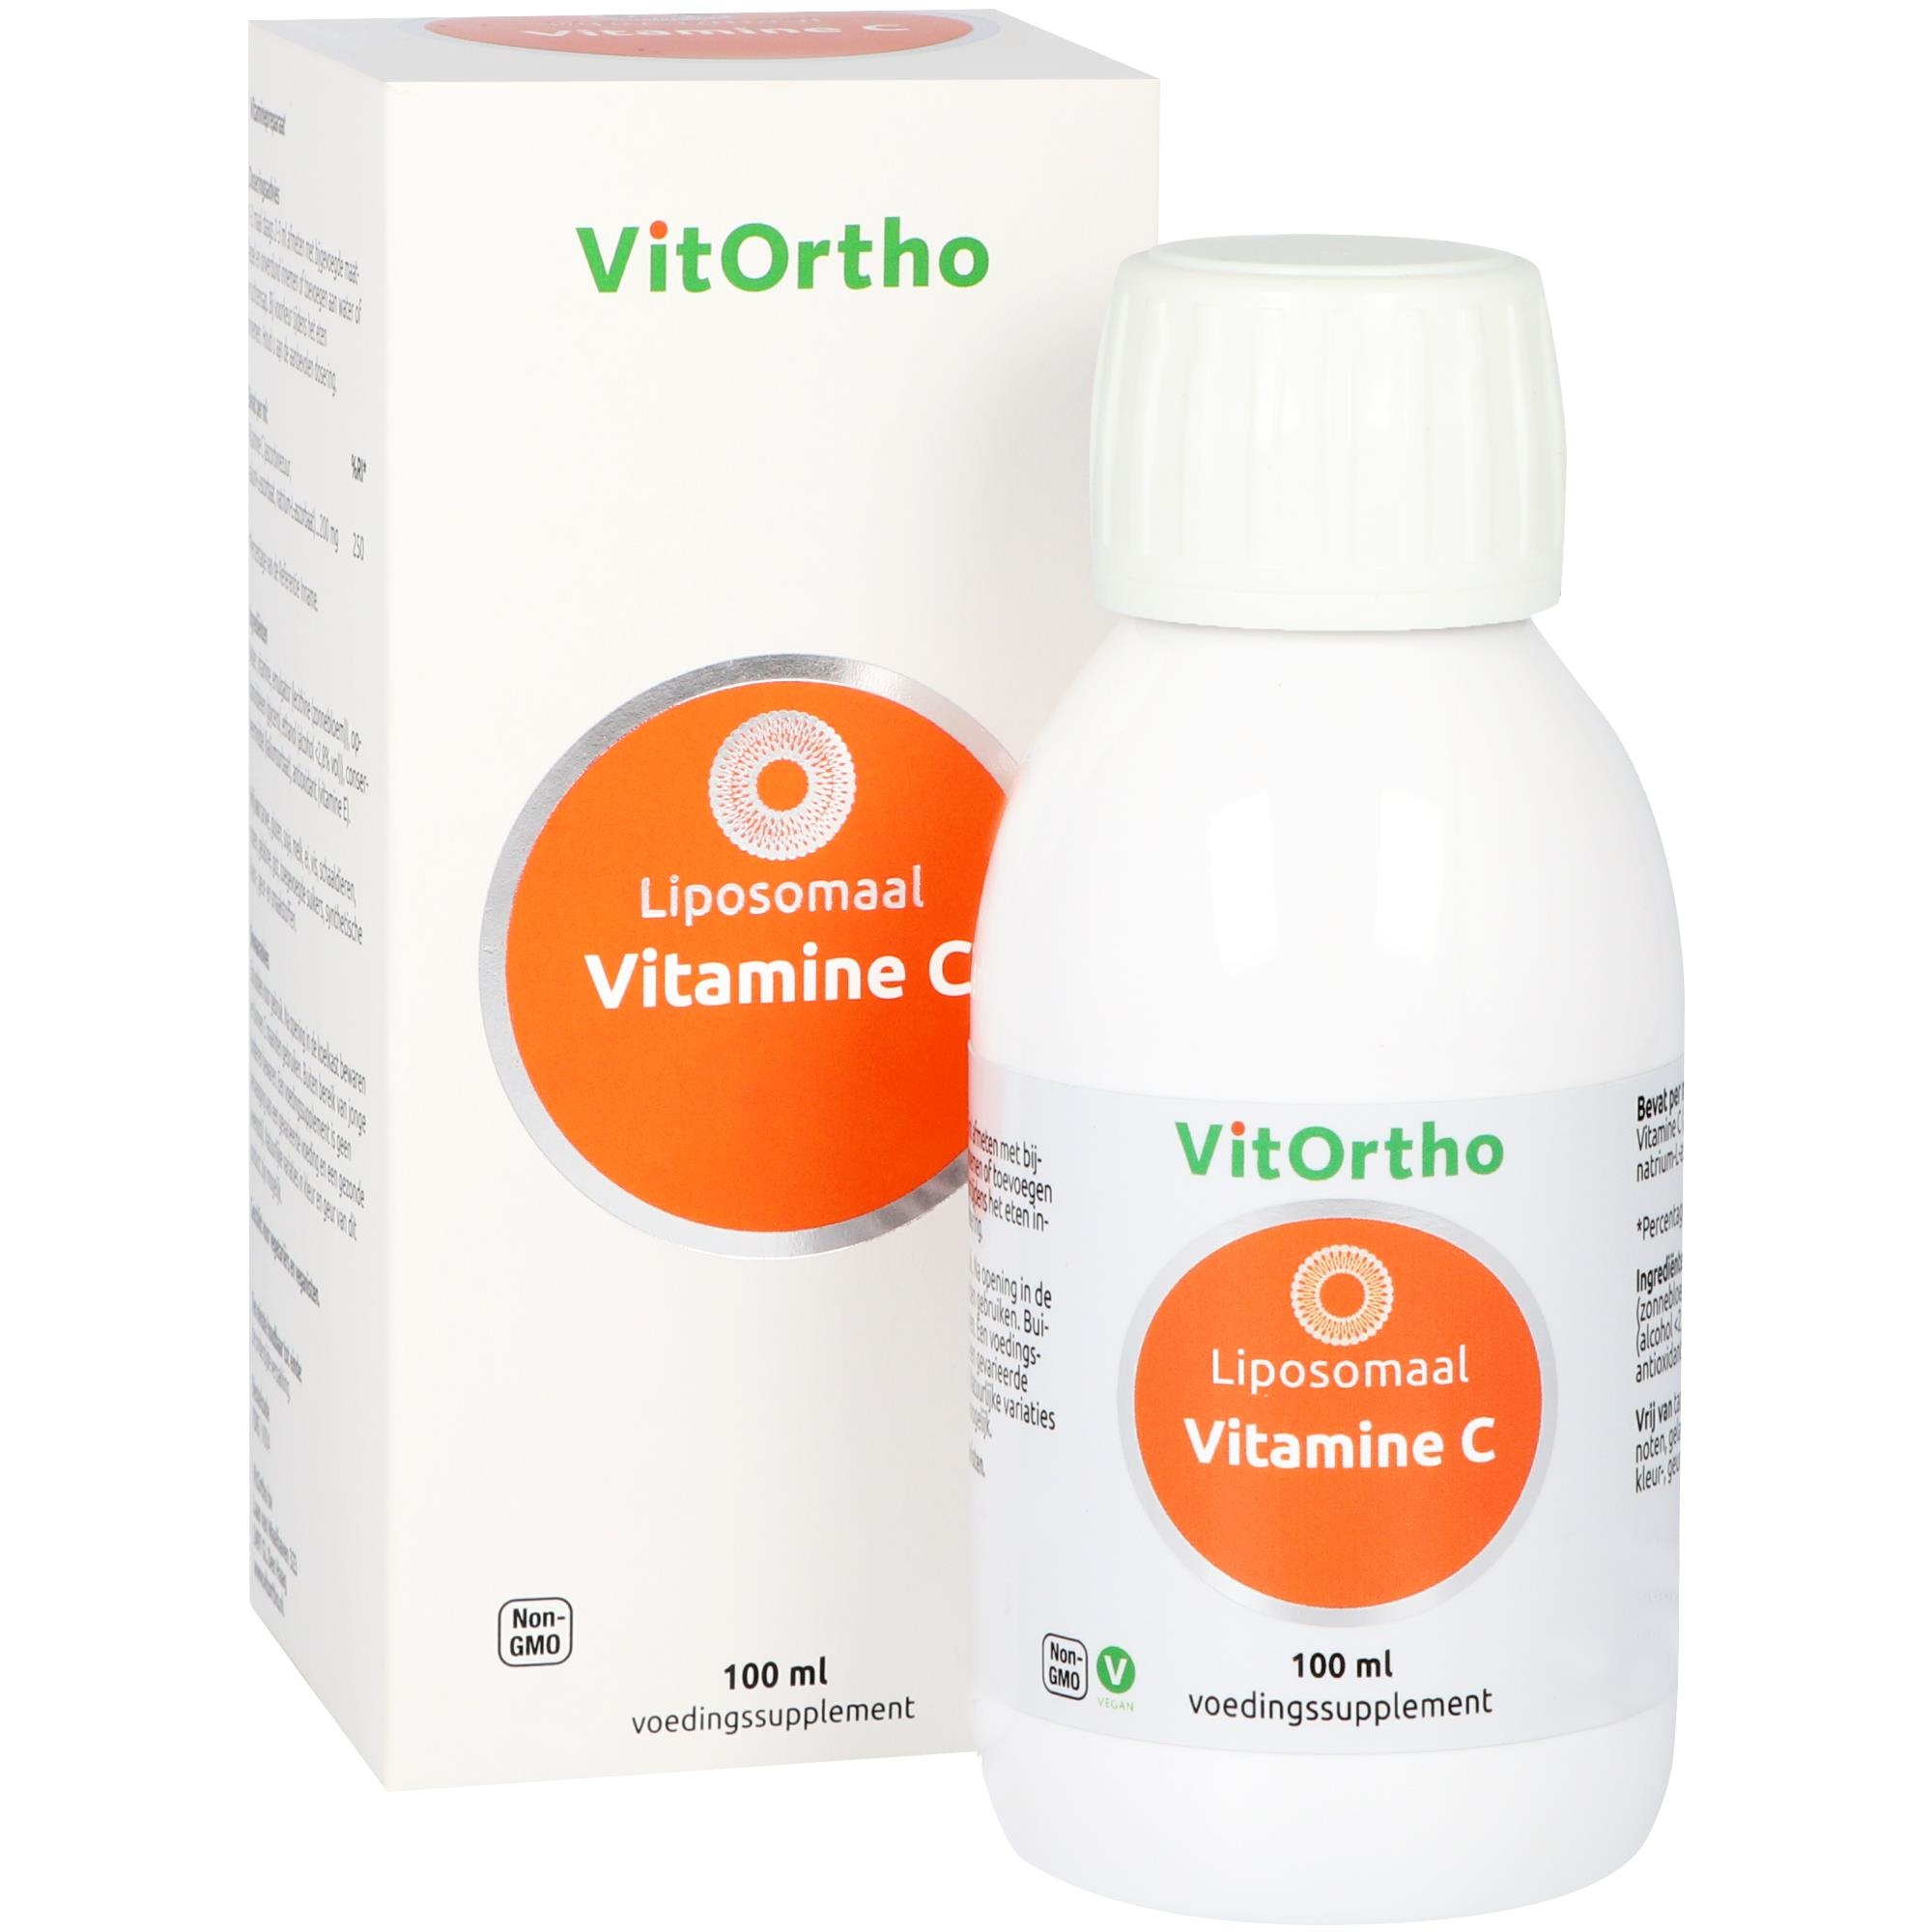 VitOrtho VitOrtho Vitamine C liposomaal (100 ml)